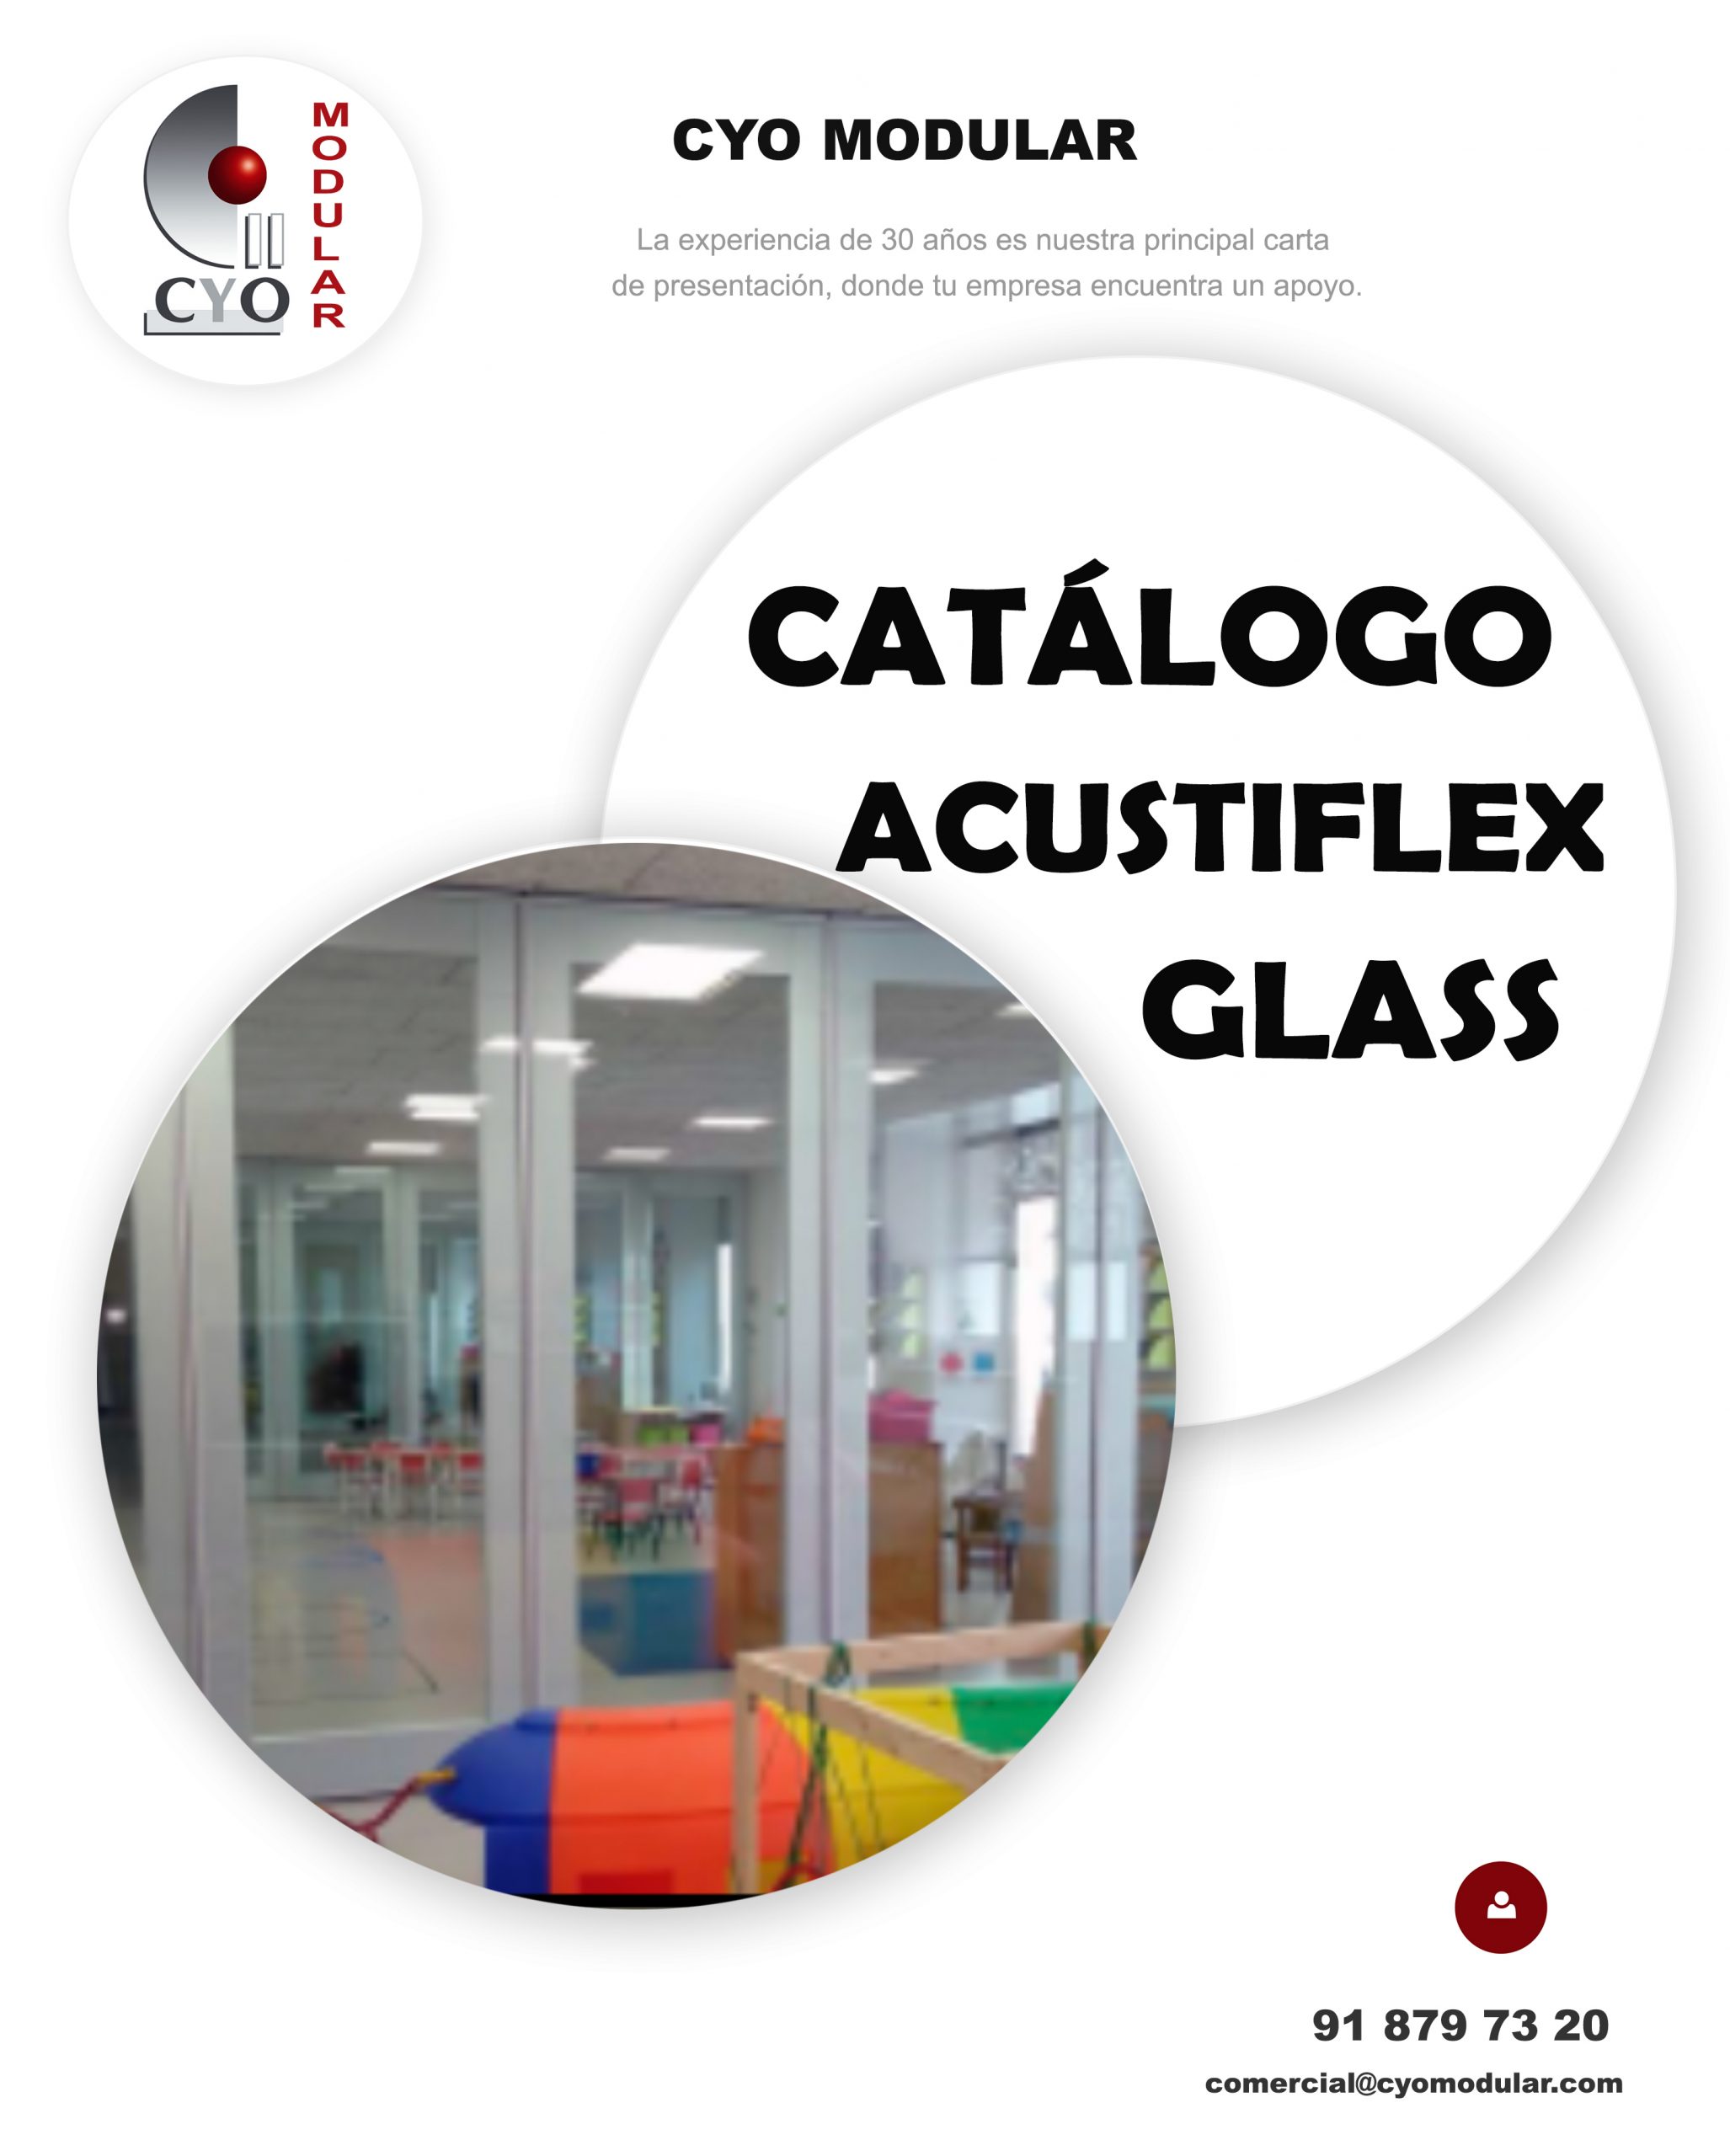 001. Acustiflex Glass